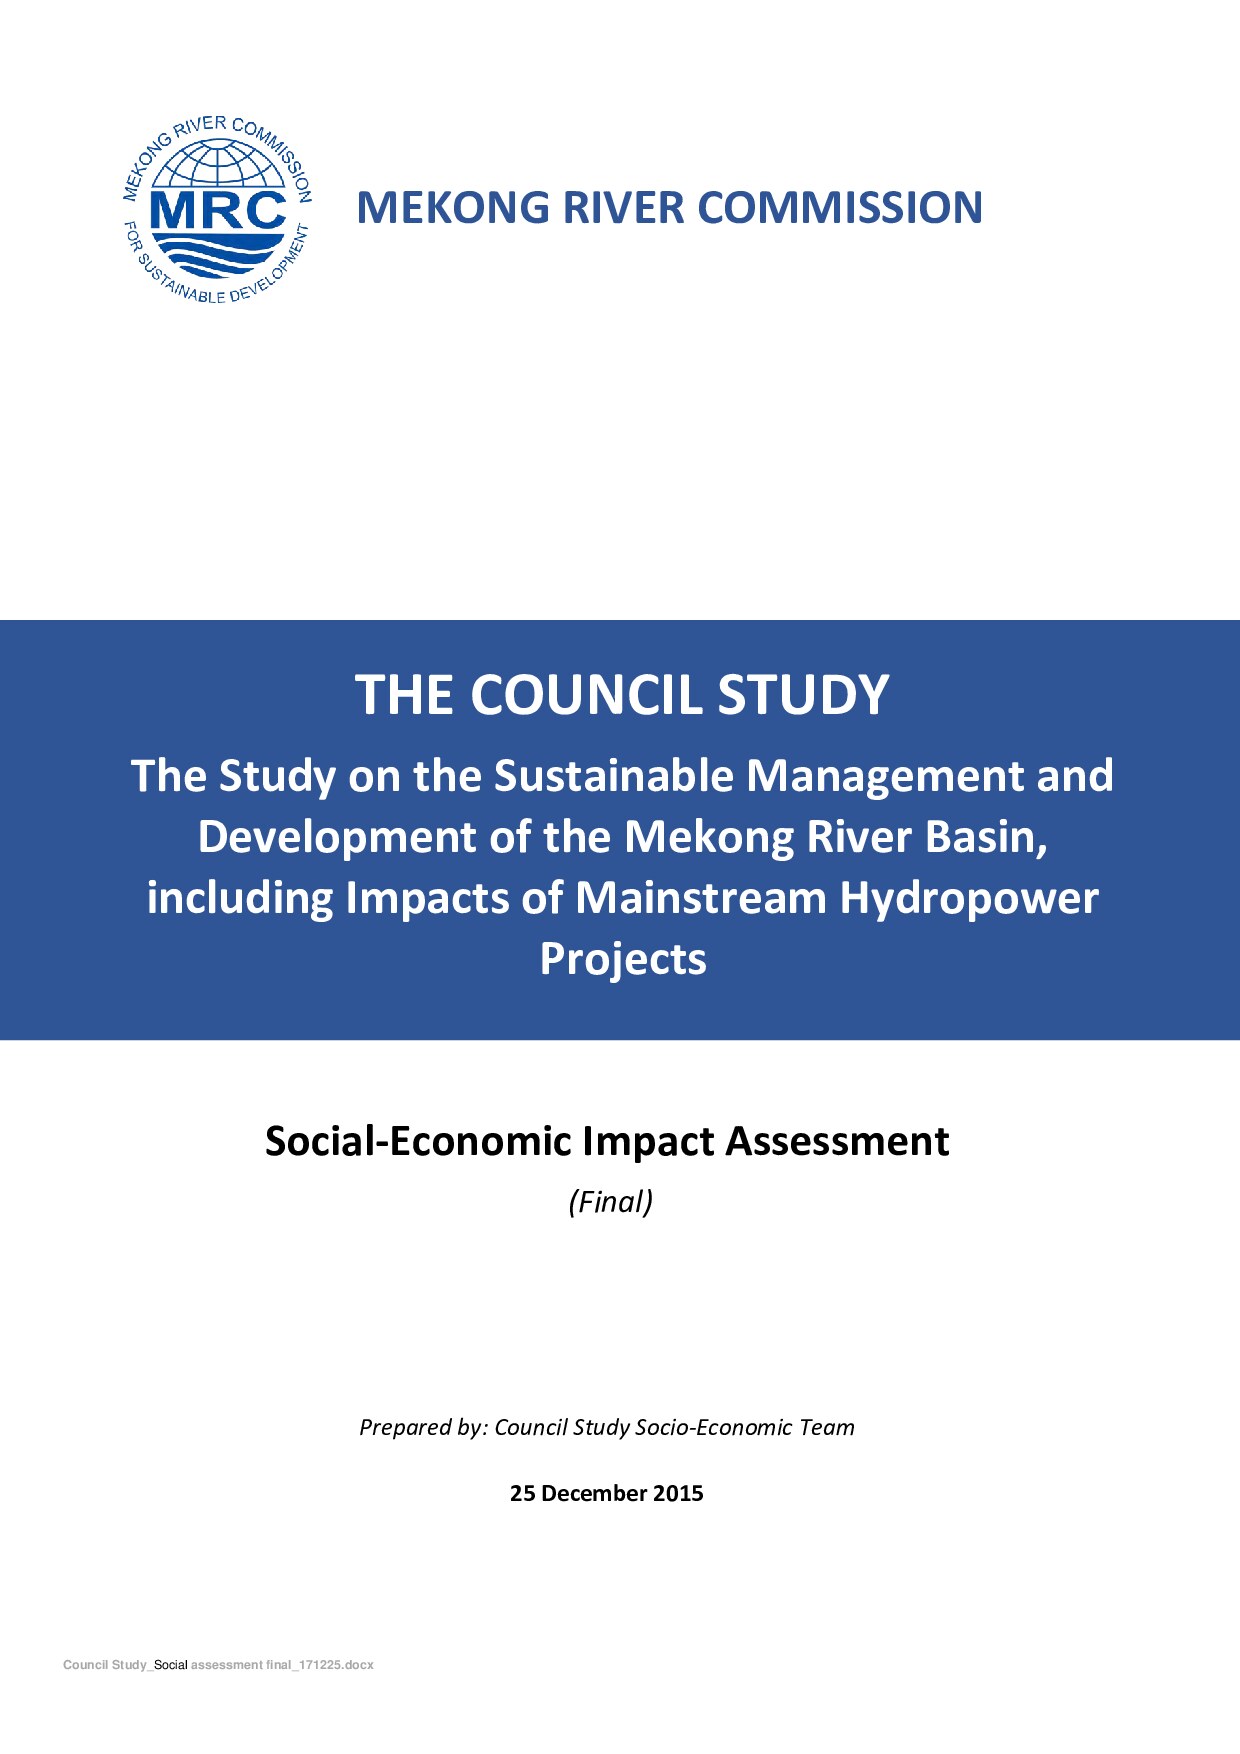 Social-Economic Impact Assessment